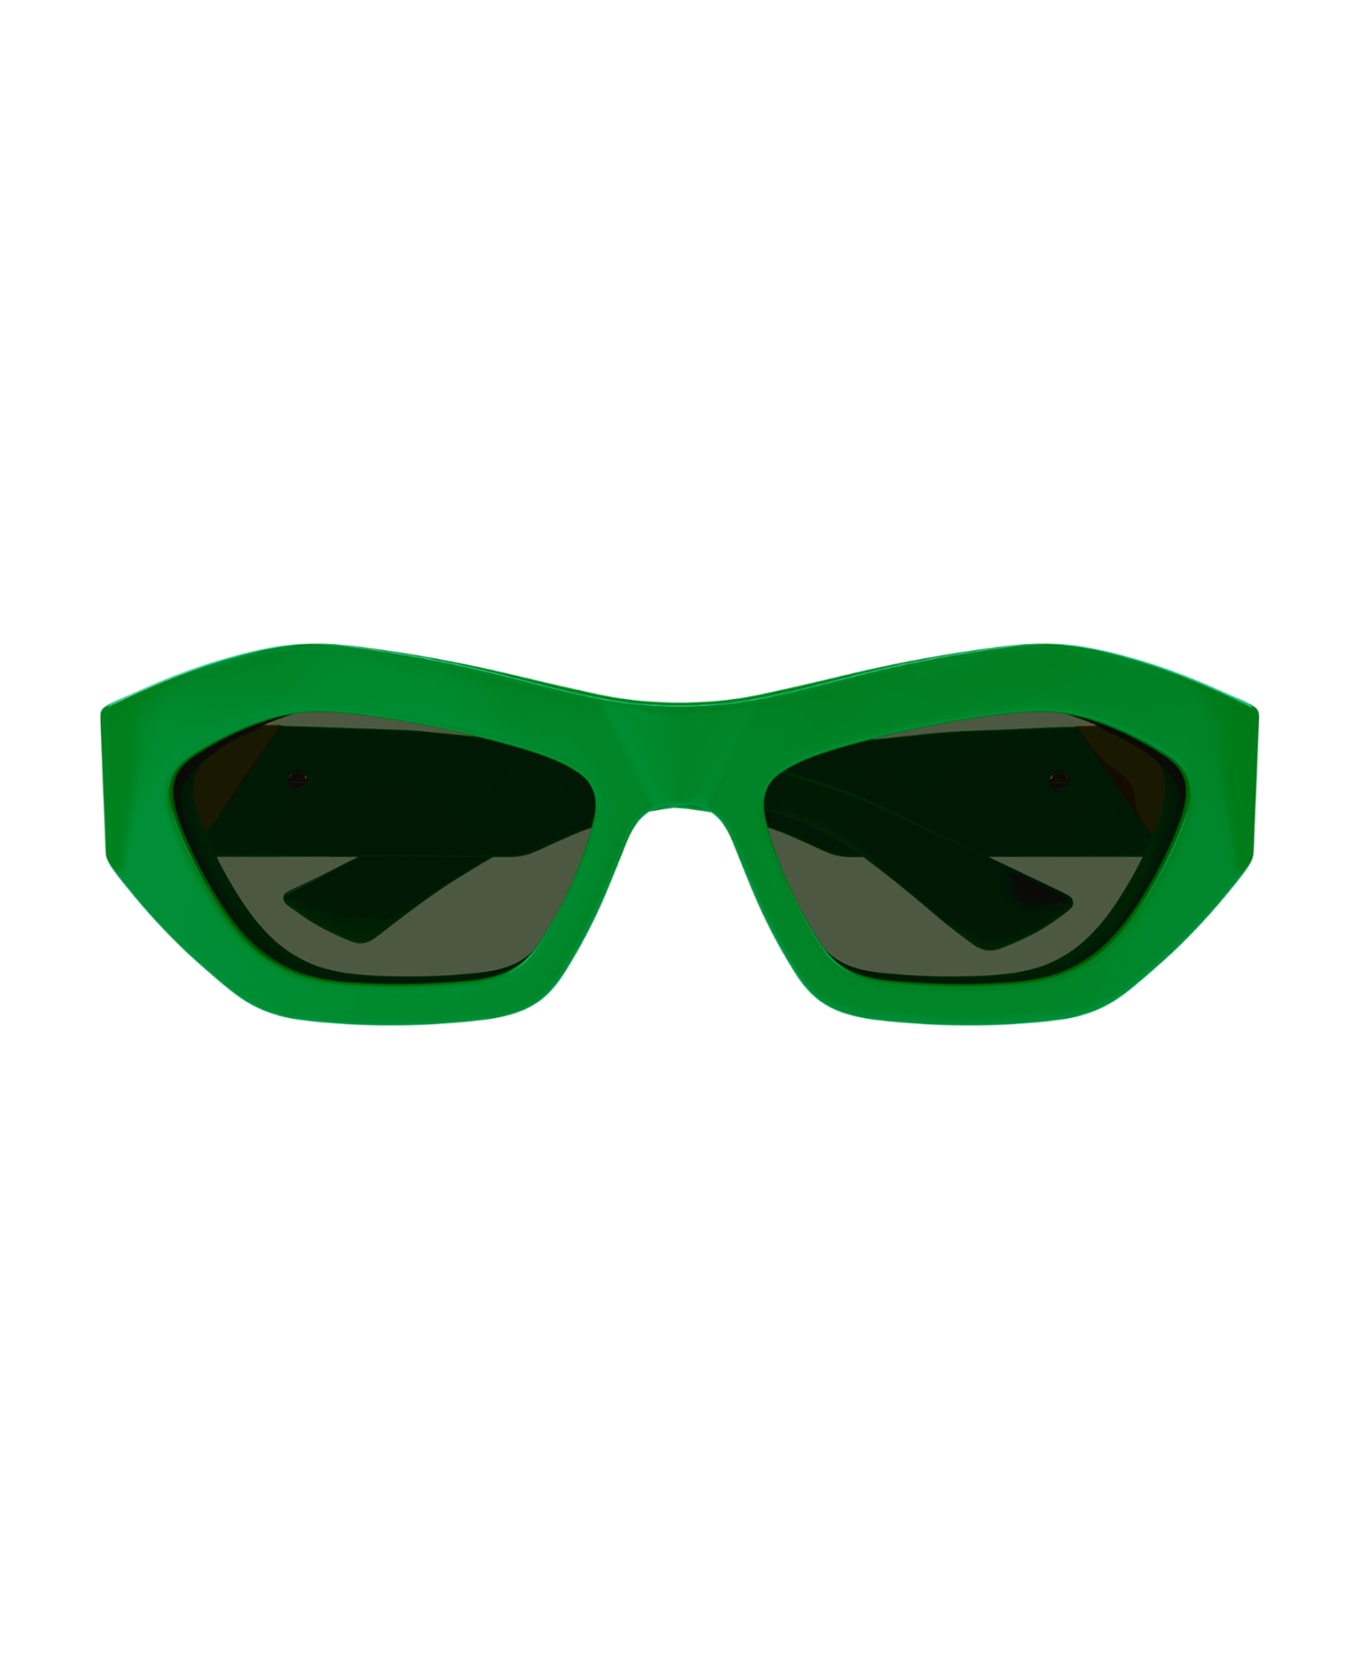 Bottega Veneta Eyewear 1fa04li0a - 003 green green green